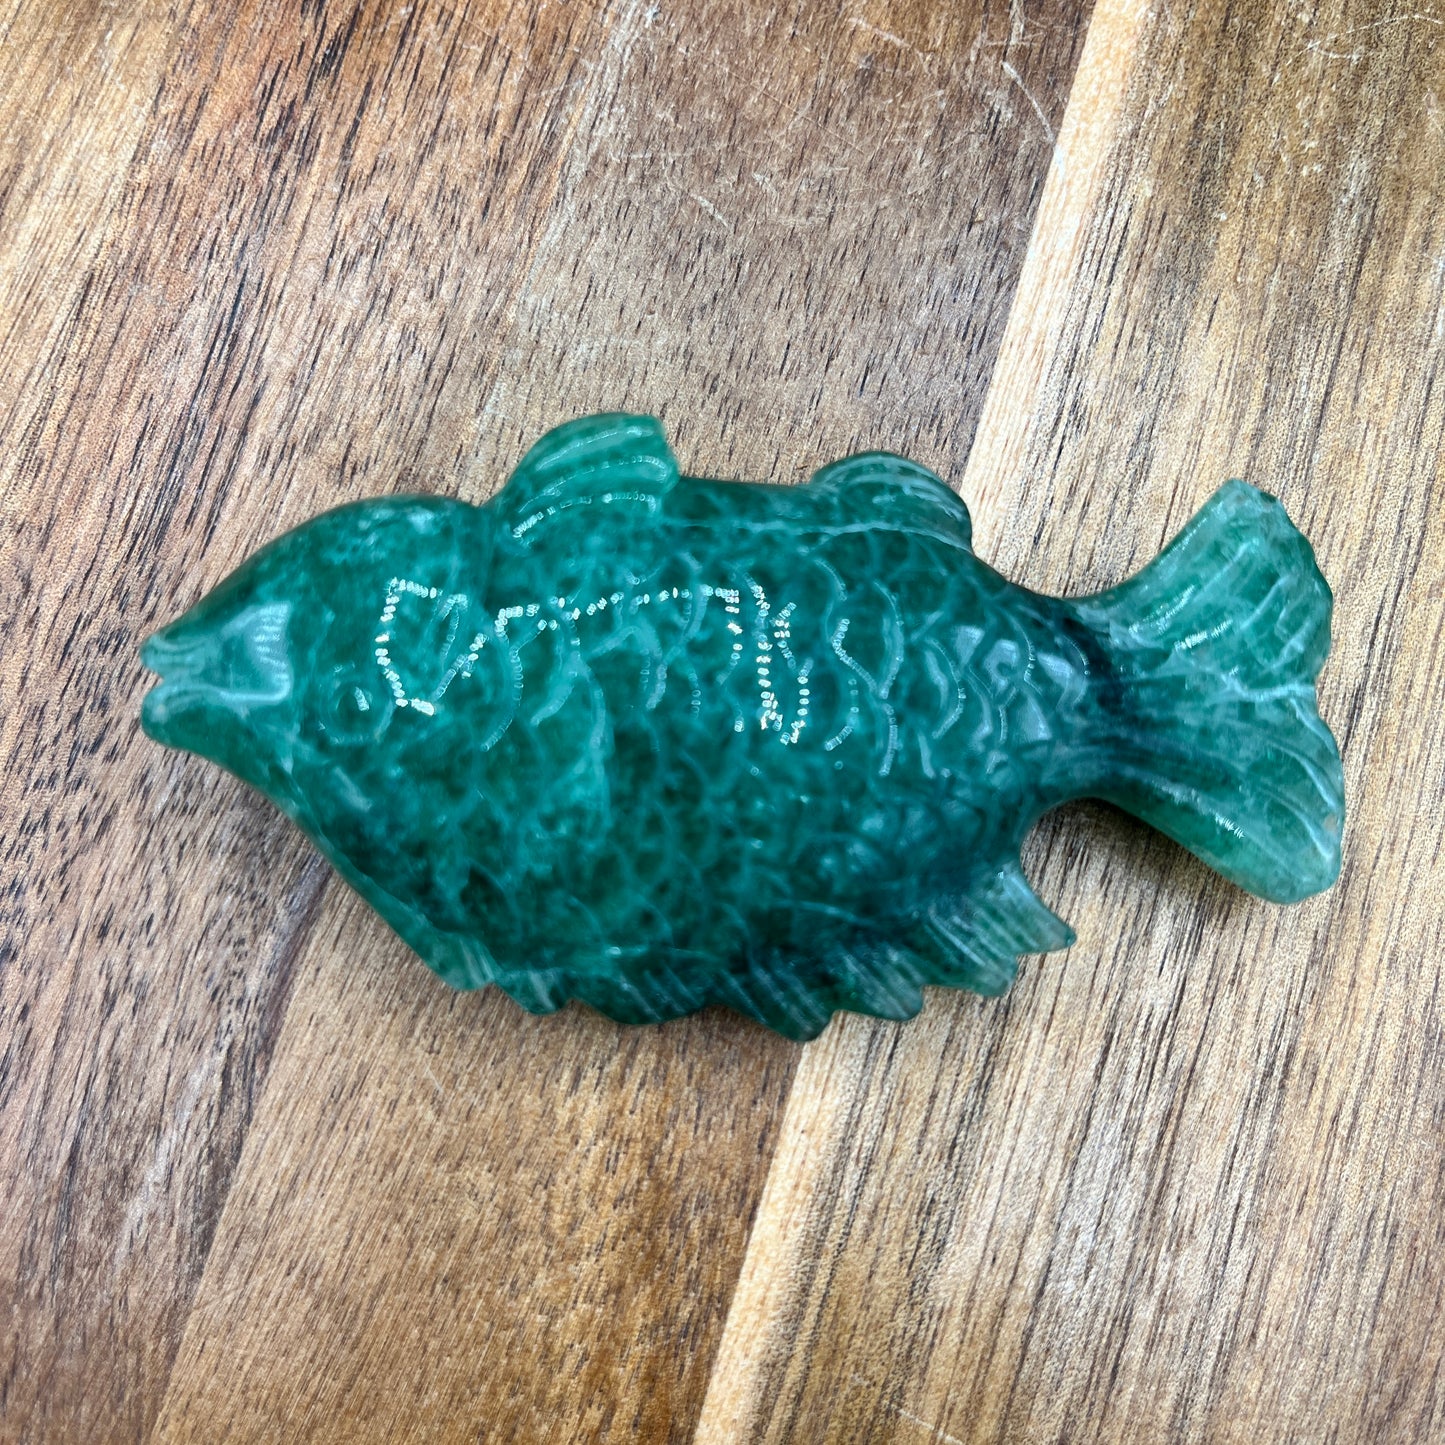 Green Aventurine Good Luck Fish